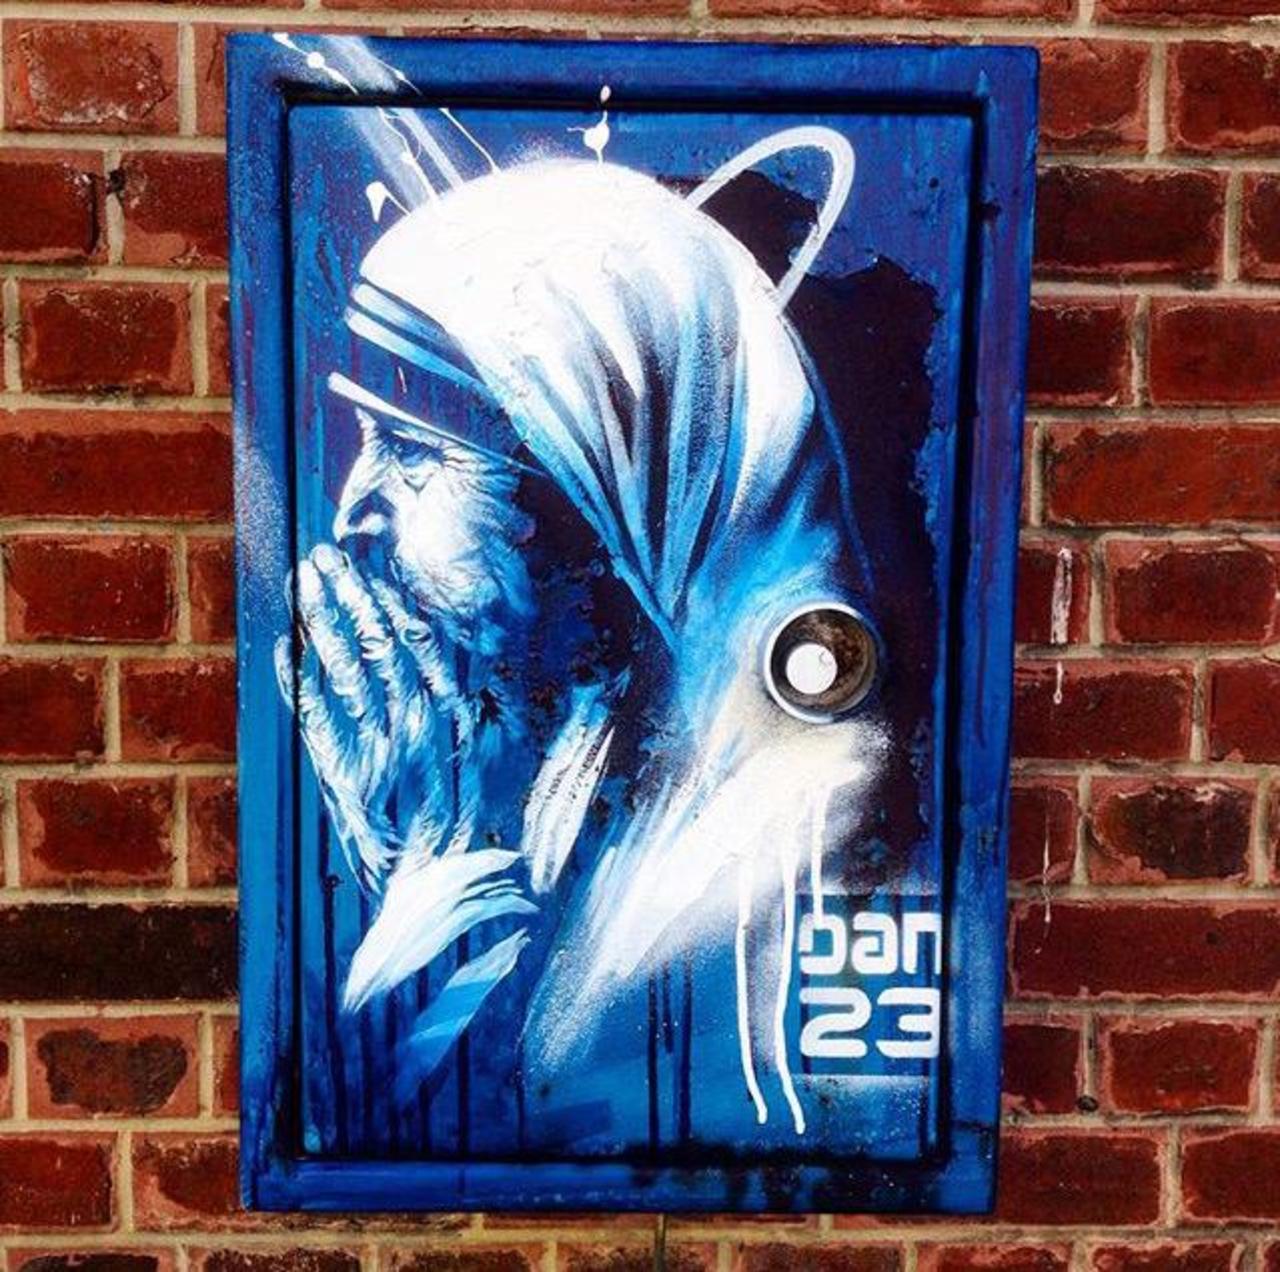 New Street Art 'Détail Spirit' by Dan23 

#art #graffiti #mural #streetart http://t.co/7lndmFVwTa